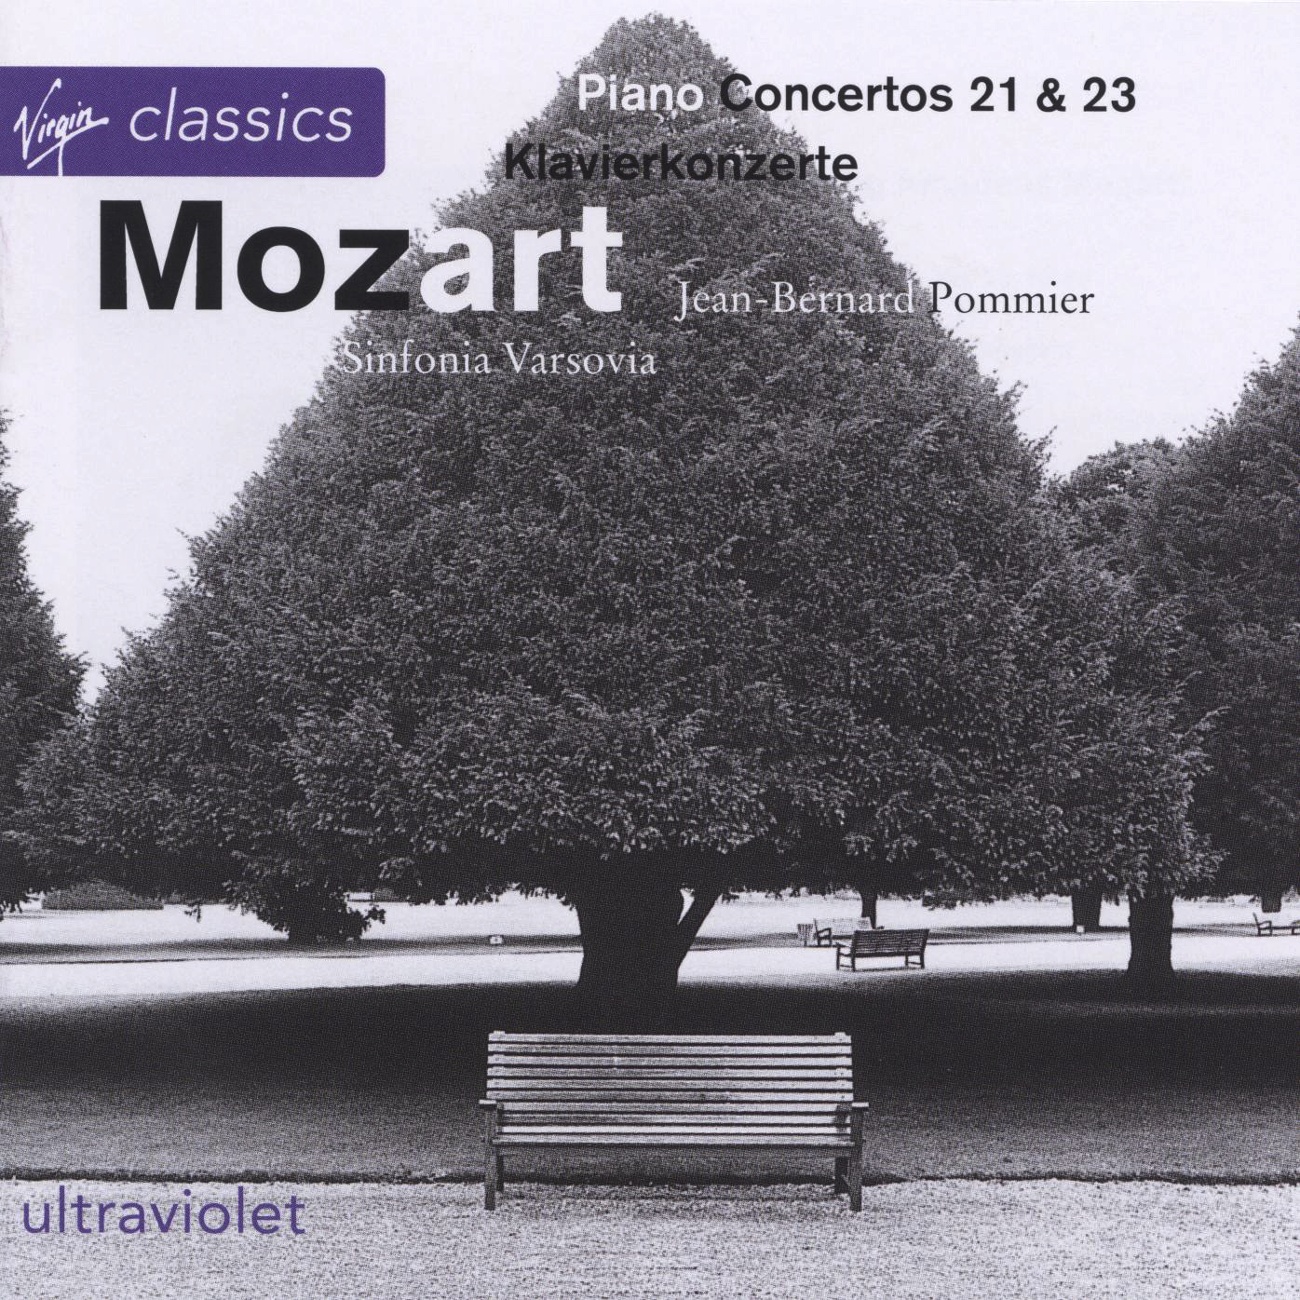 Piano Concerto No. 21 in C major K467.: III.     Allegro vivace assai